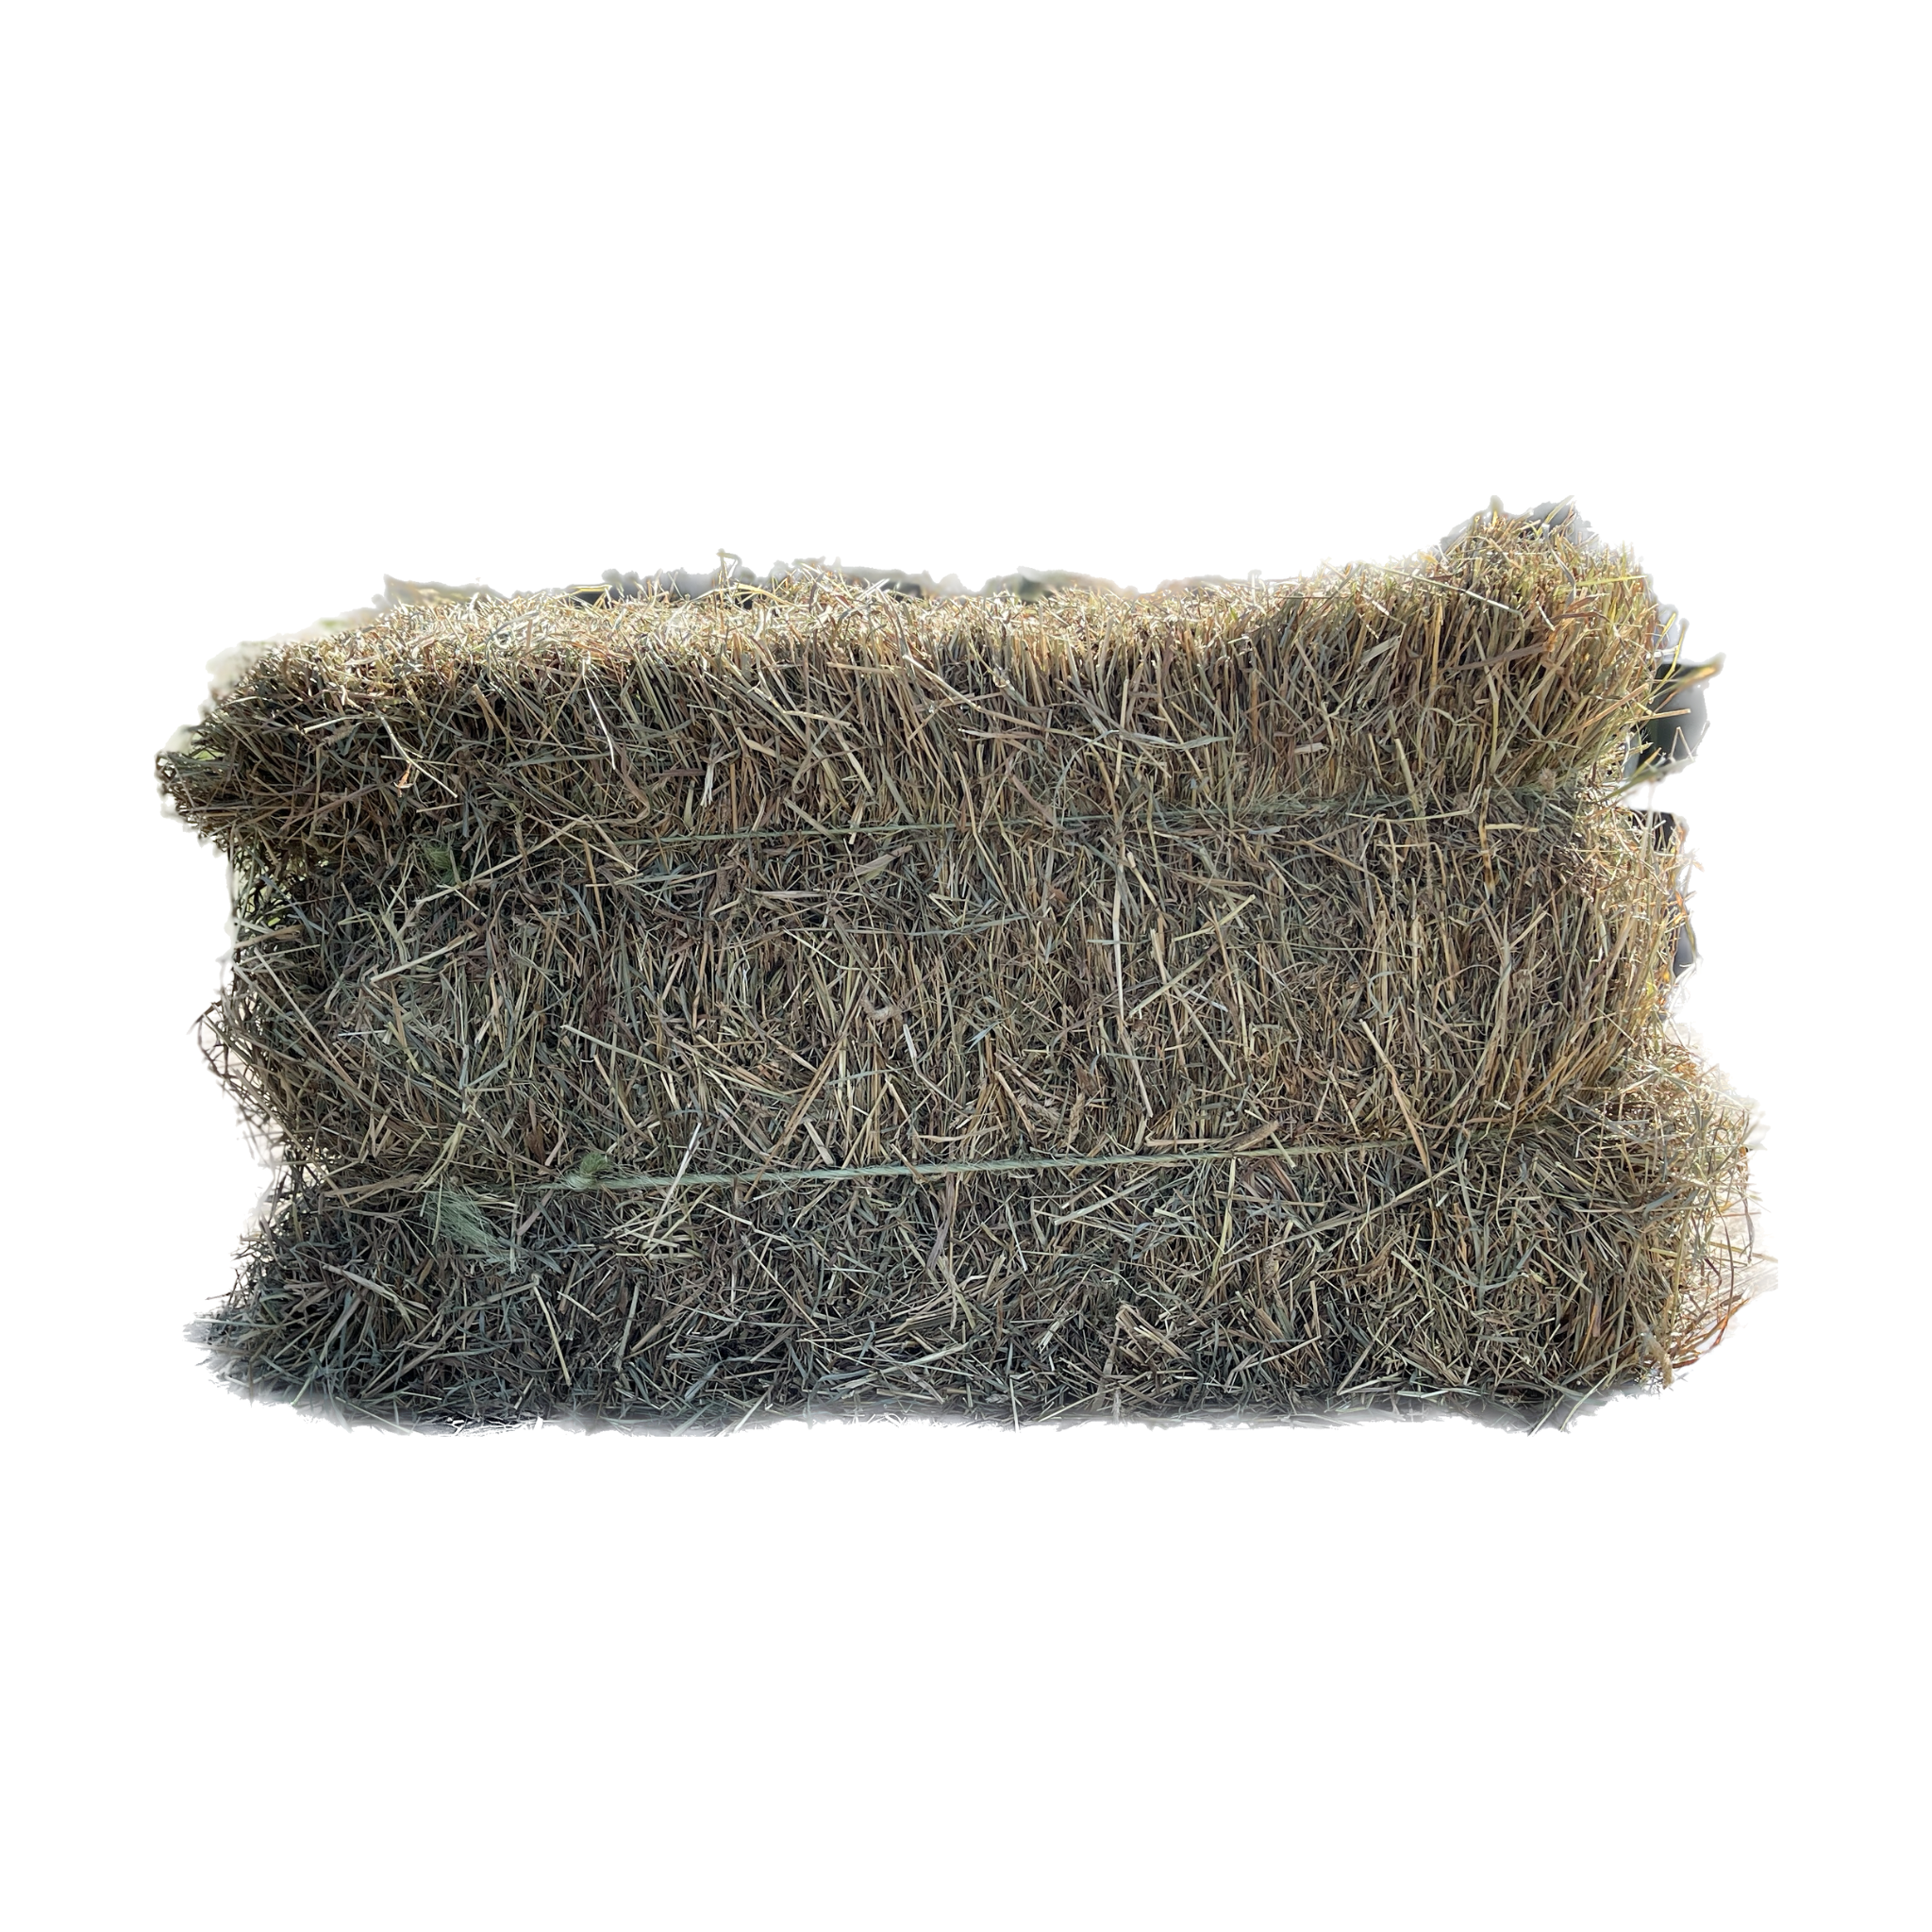 Timothy Grass Mix Standard Hay Bale Forage